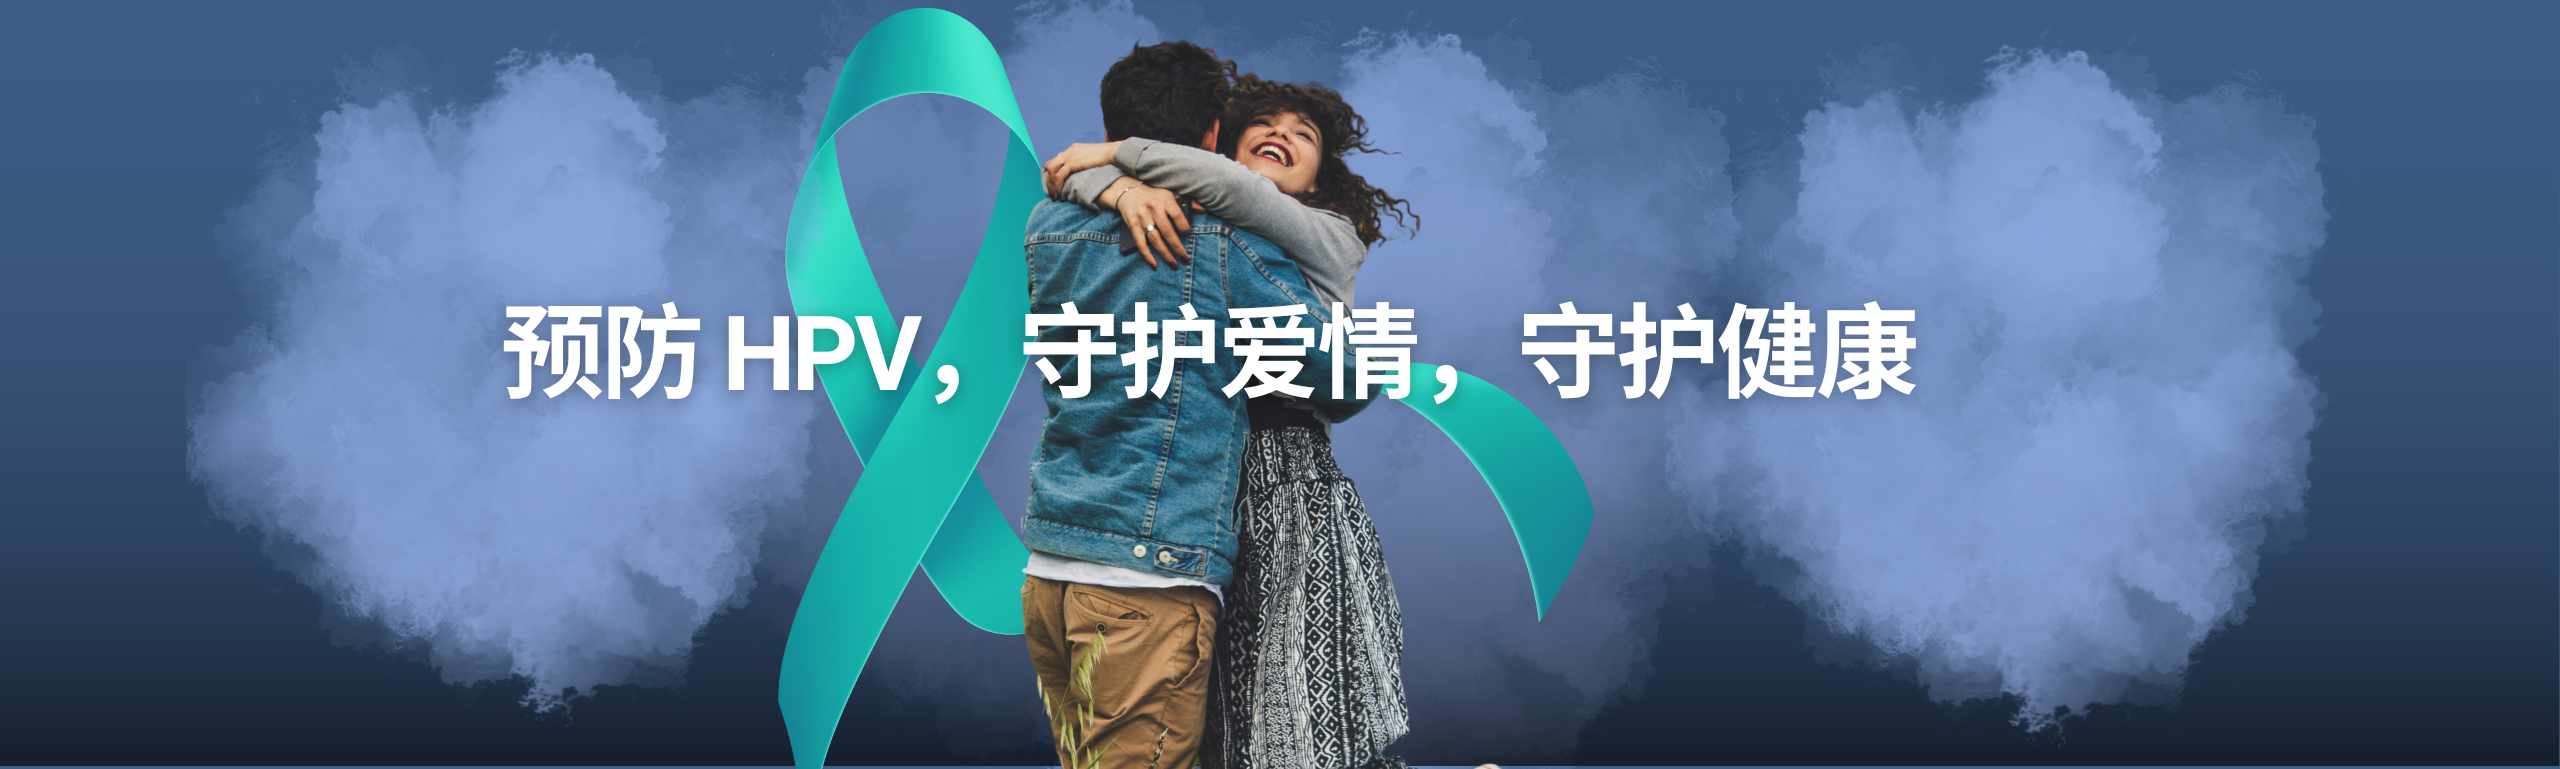 HPV, KIDNEY WOMENS DAY Desktop Banner CN